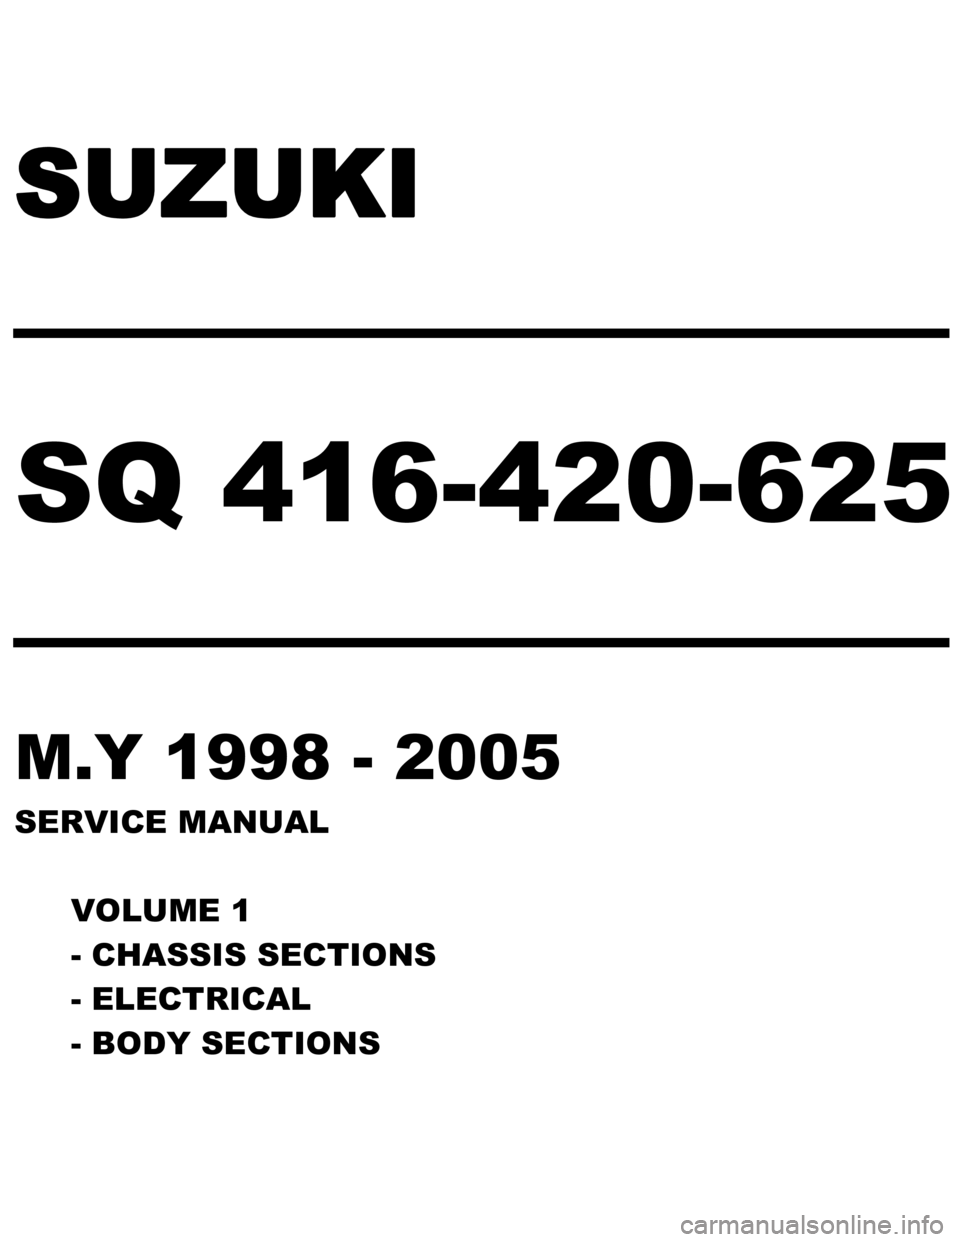 SUZUKI GRAND VITARA 2002 2.G Service Workshop Manual 
SUZUKI  
──────────── 
SQ 416-420-625 
──────────── 
M.Y 1998 - 2005 
SERVICE MANUAL   
VOLUME 1 
- CHASSIS SECTIONS 
- ELECTRICAL 
- BODY SECTIONS  